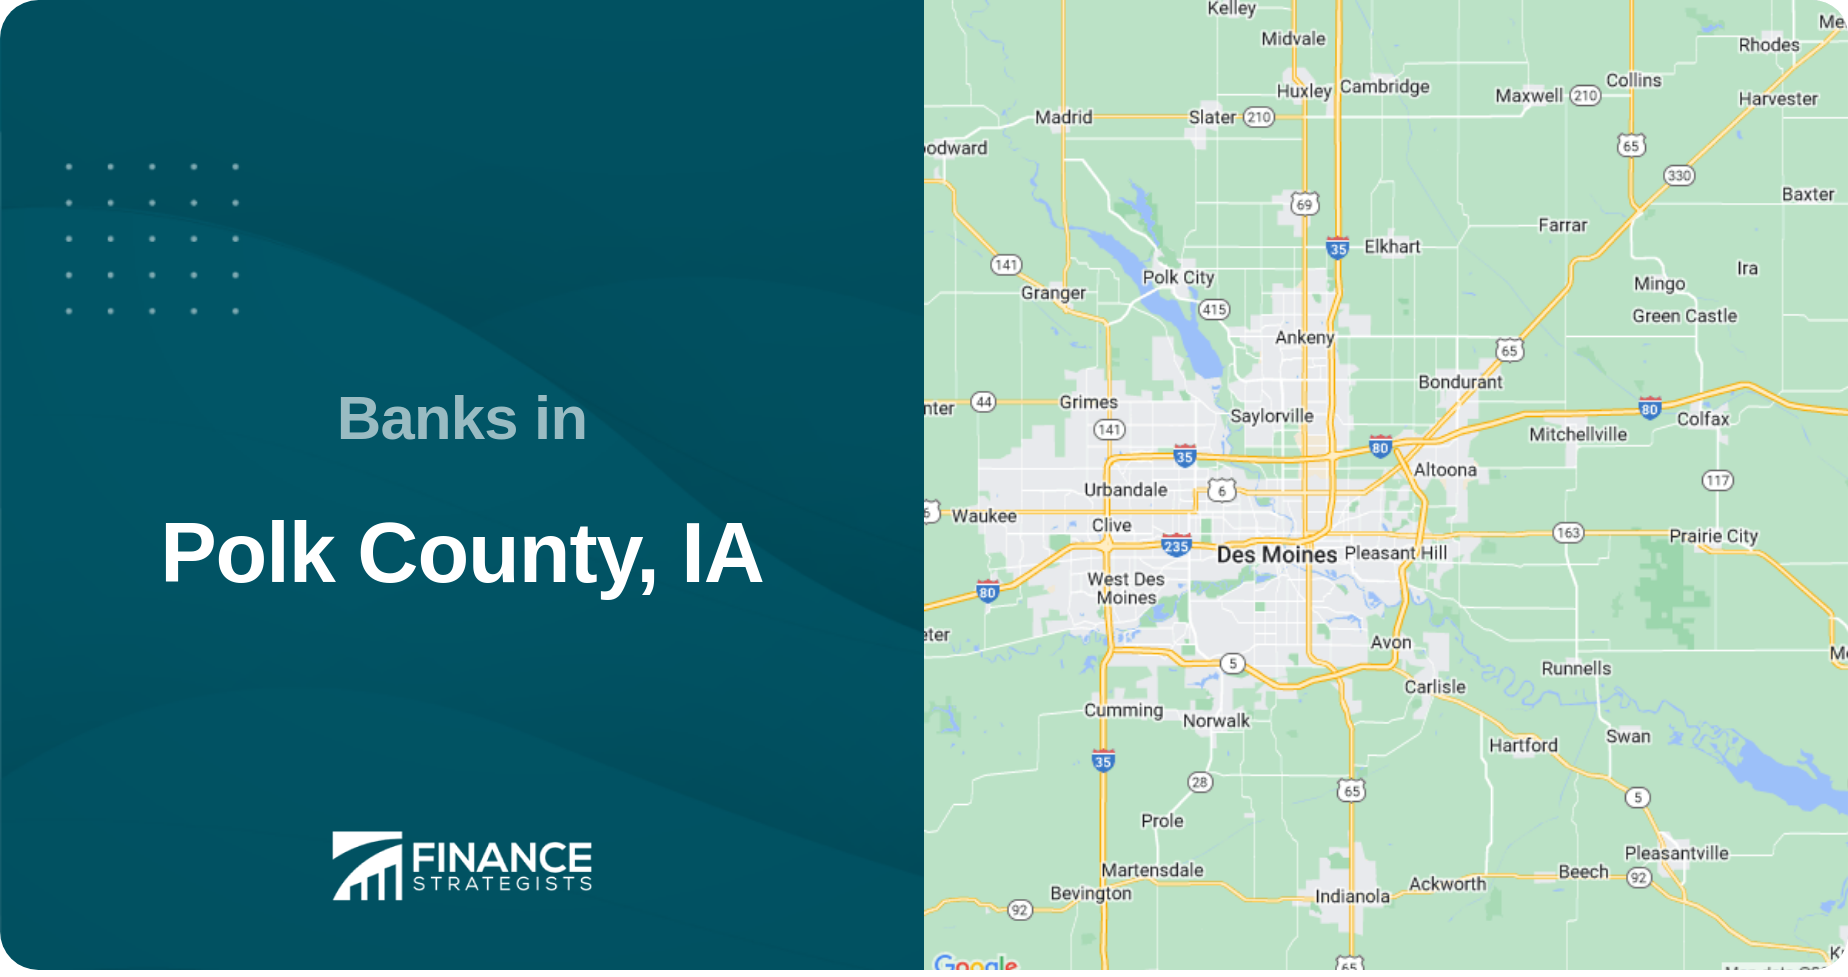 Banks in Polk County, IA